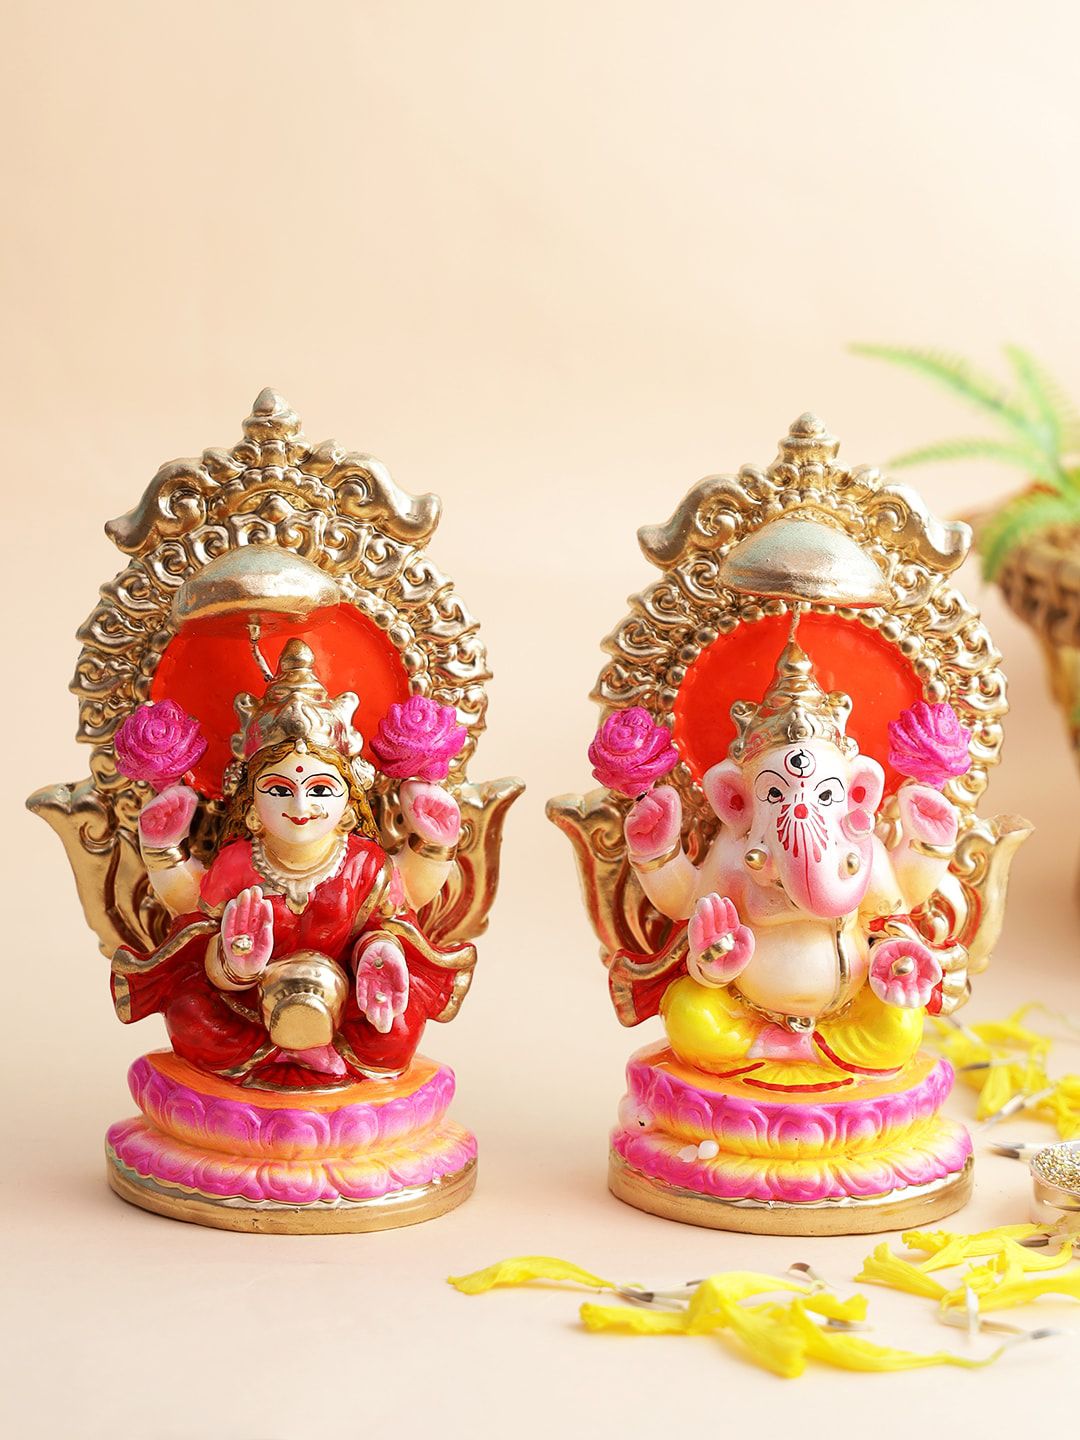 Aapno Rajasthan Gold-Colored Pink Laxmi Ganesh Idol Set Sitting On Throne Price in India